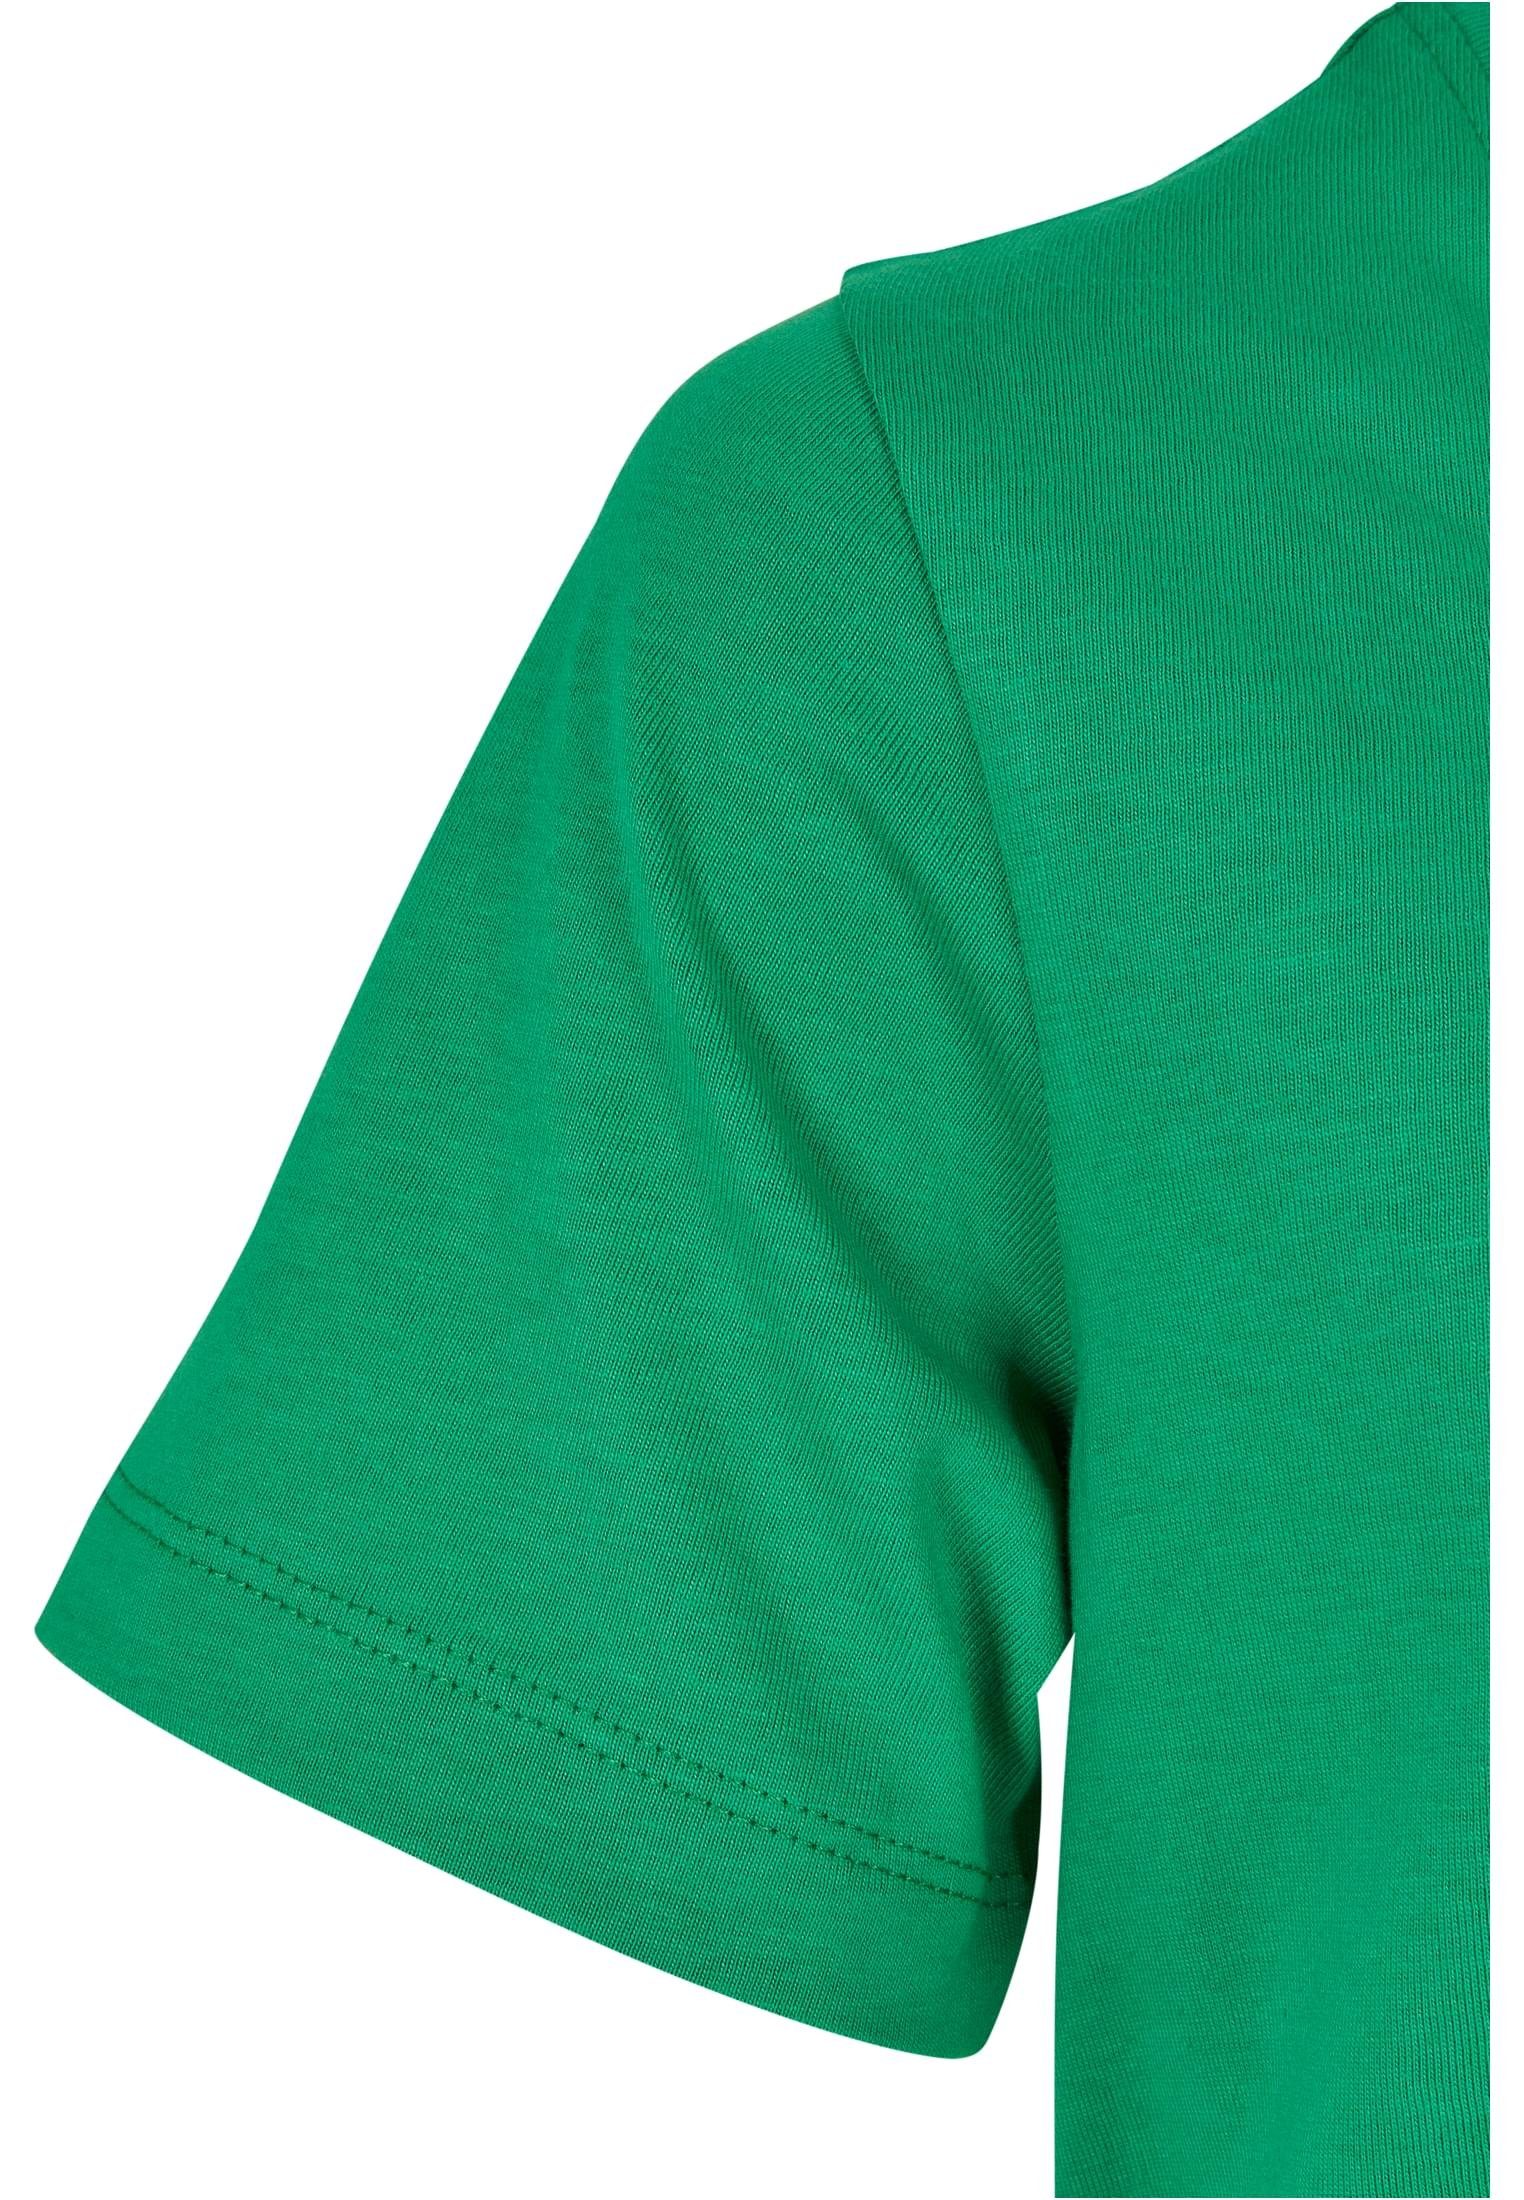 Jerseykleid (1-tlg) bodegagreen URBAN Girls Valance Damen Tee CLASSICS Dress